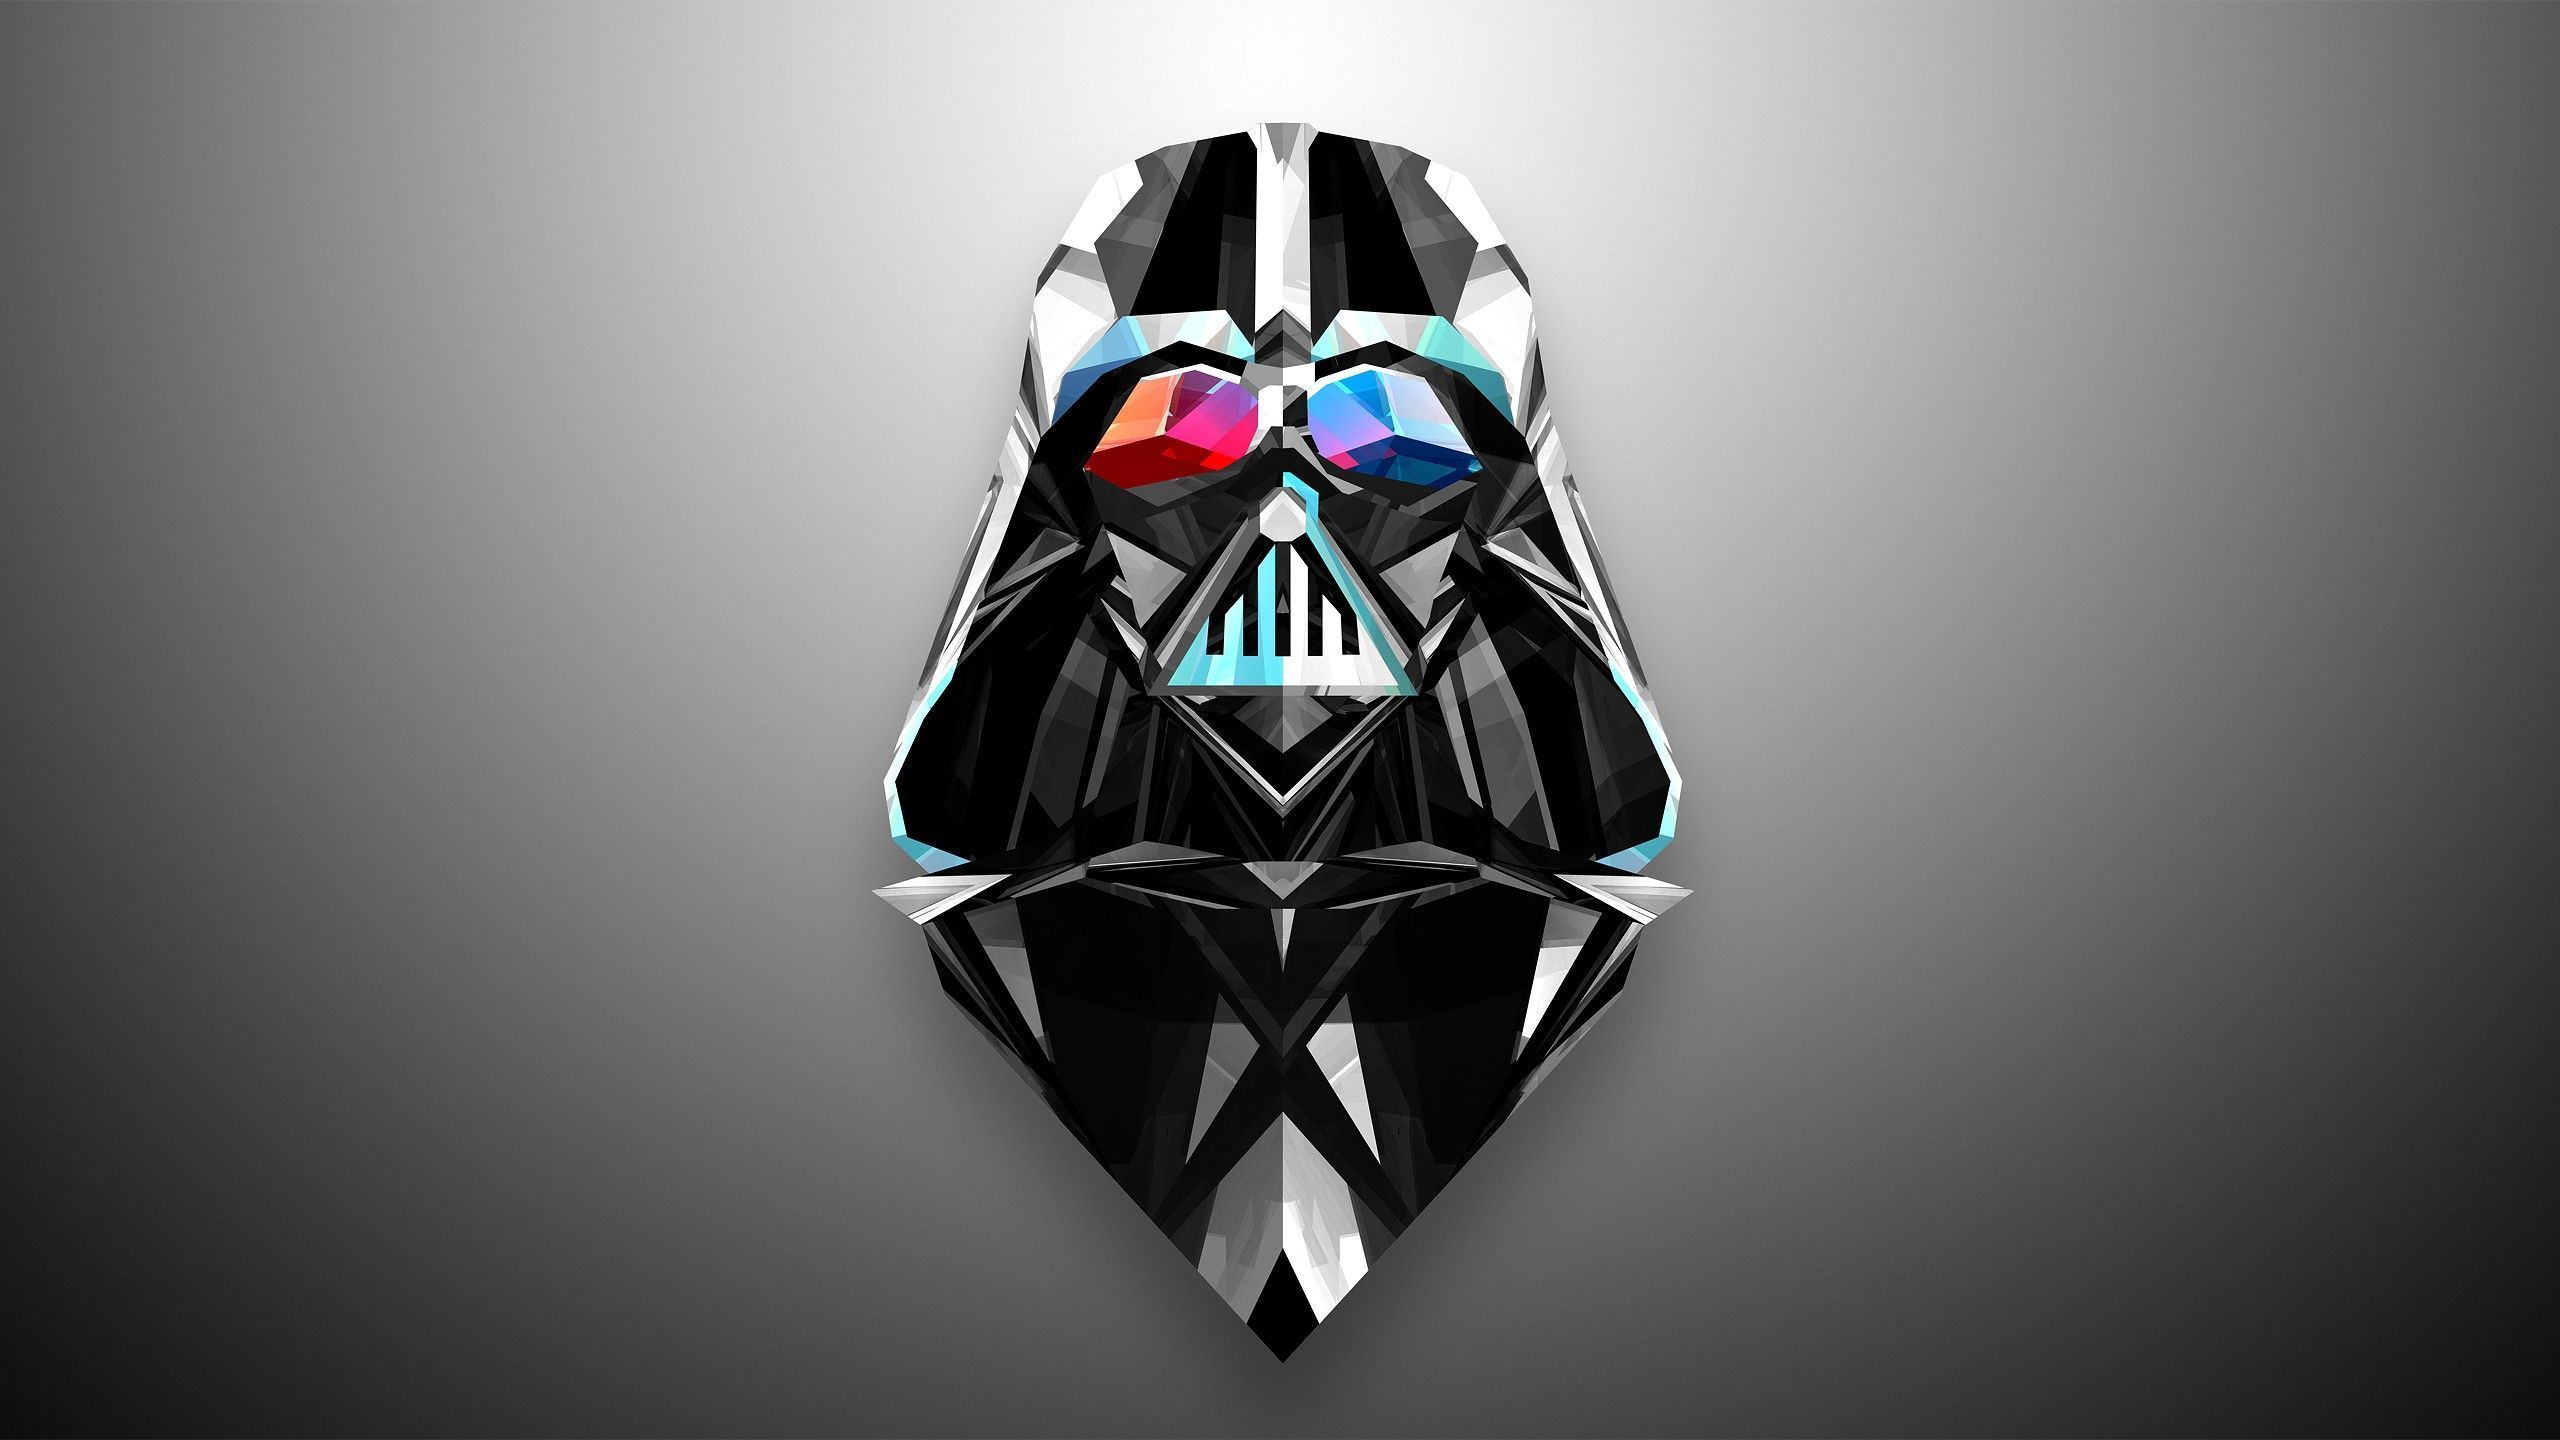 Darth Vader mask Wars desktop wallpaper 29286